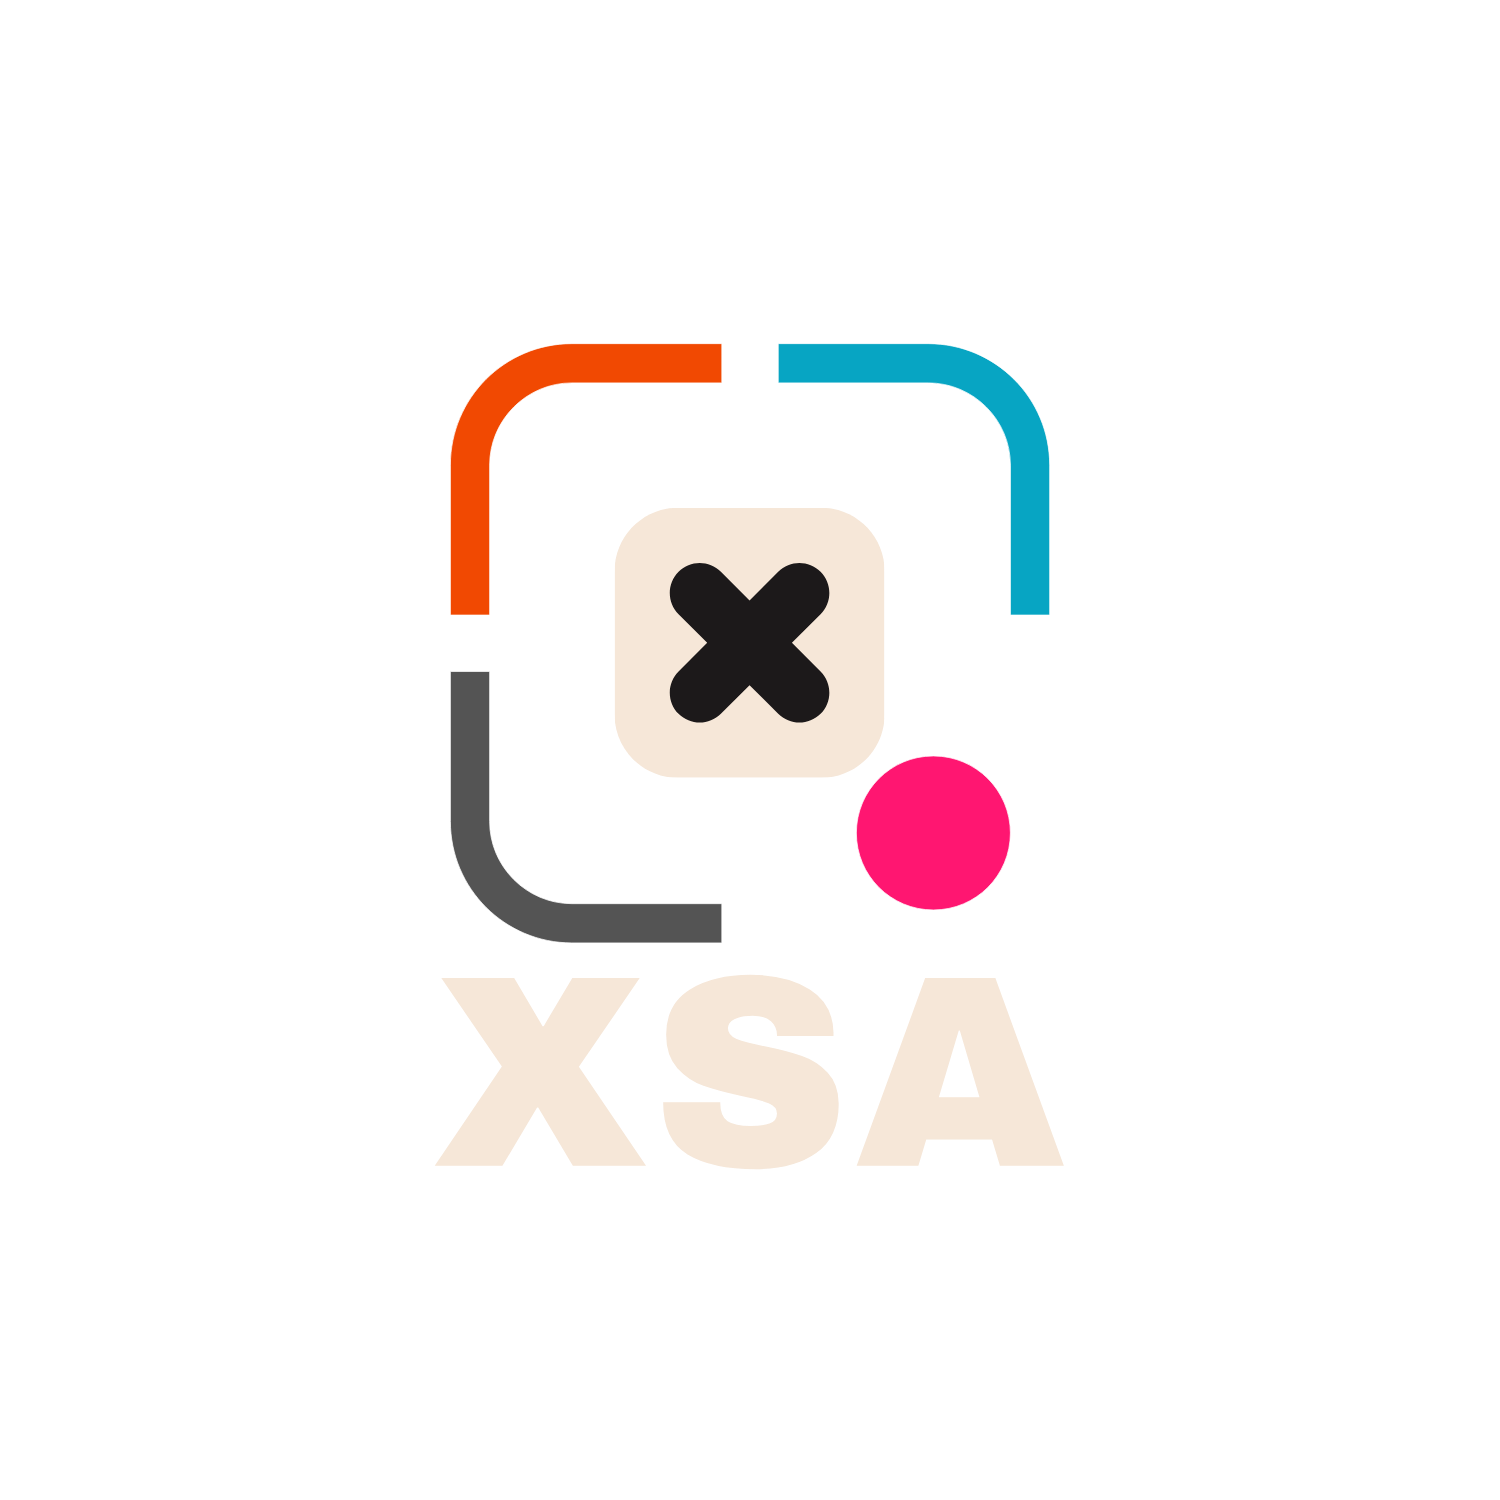 XSA Web Development Services